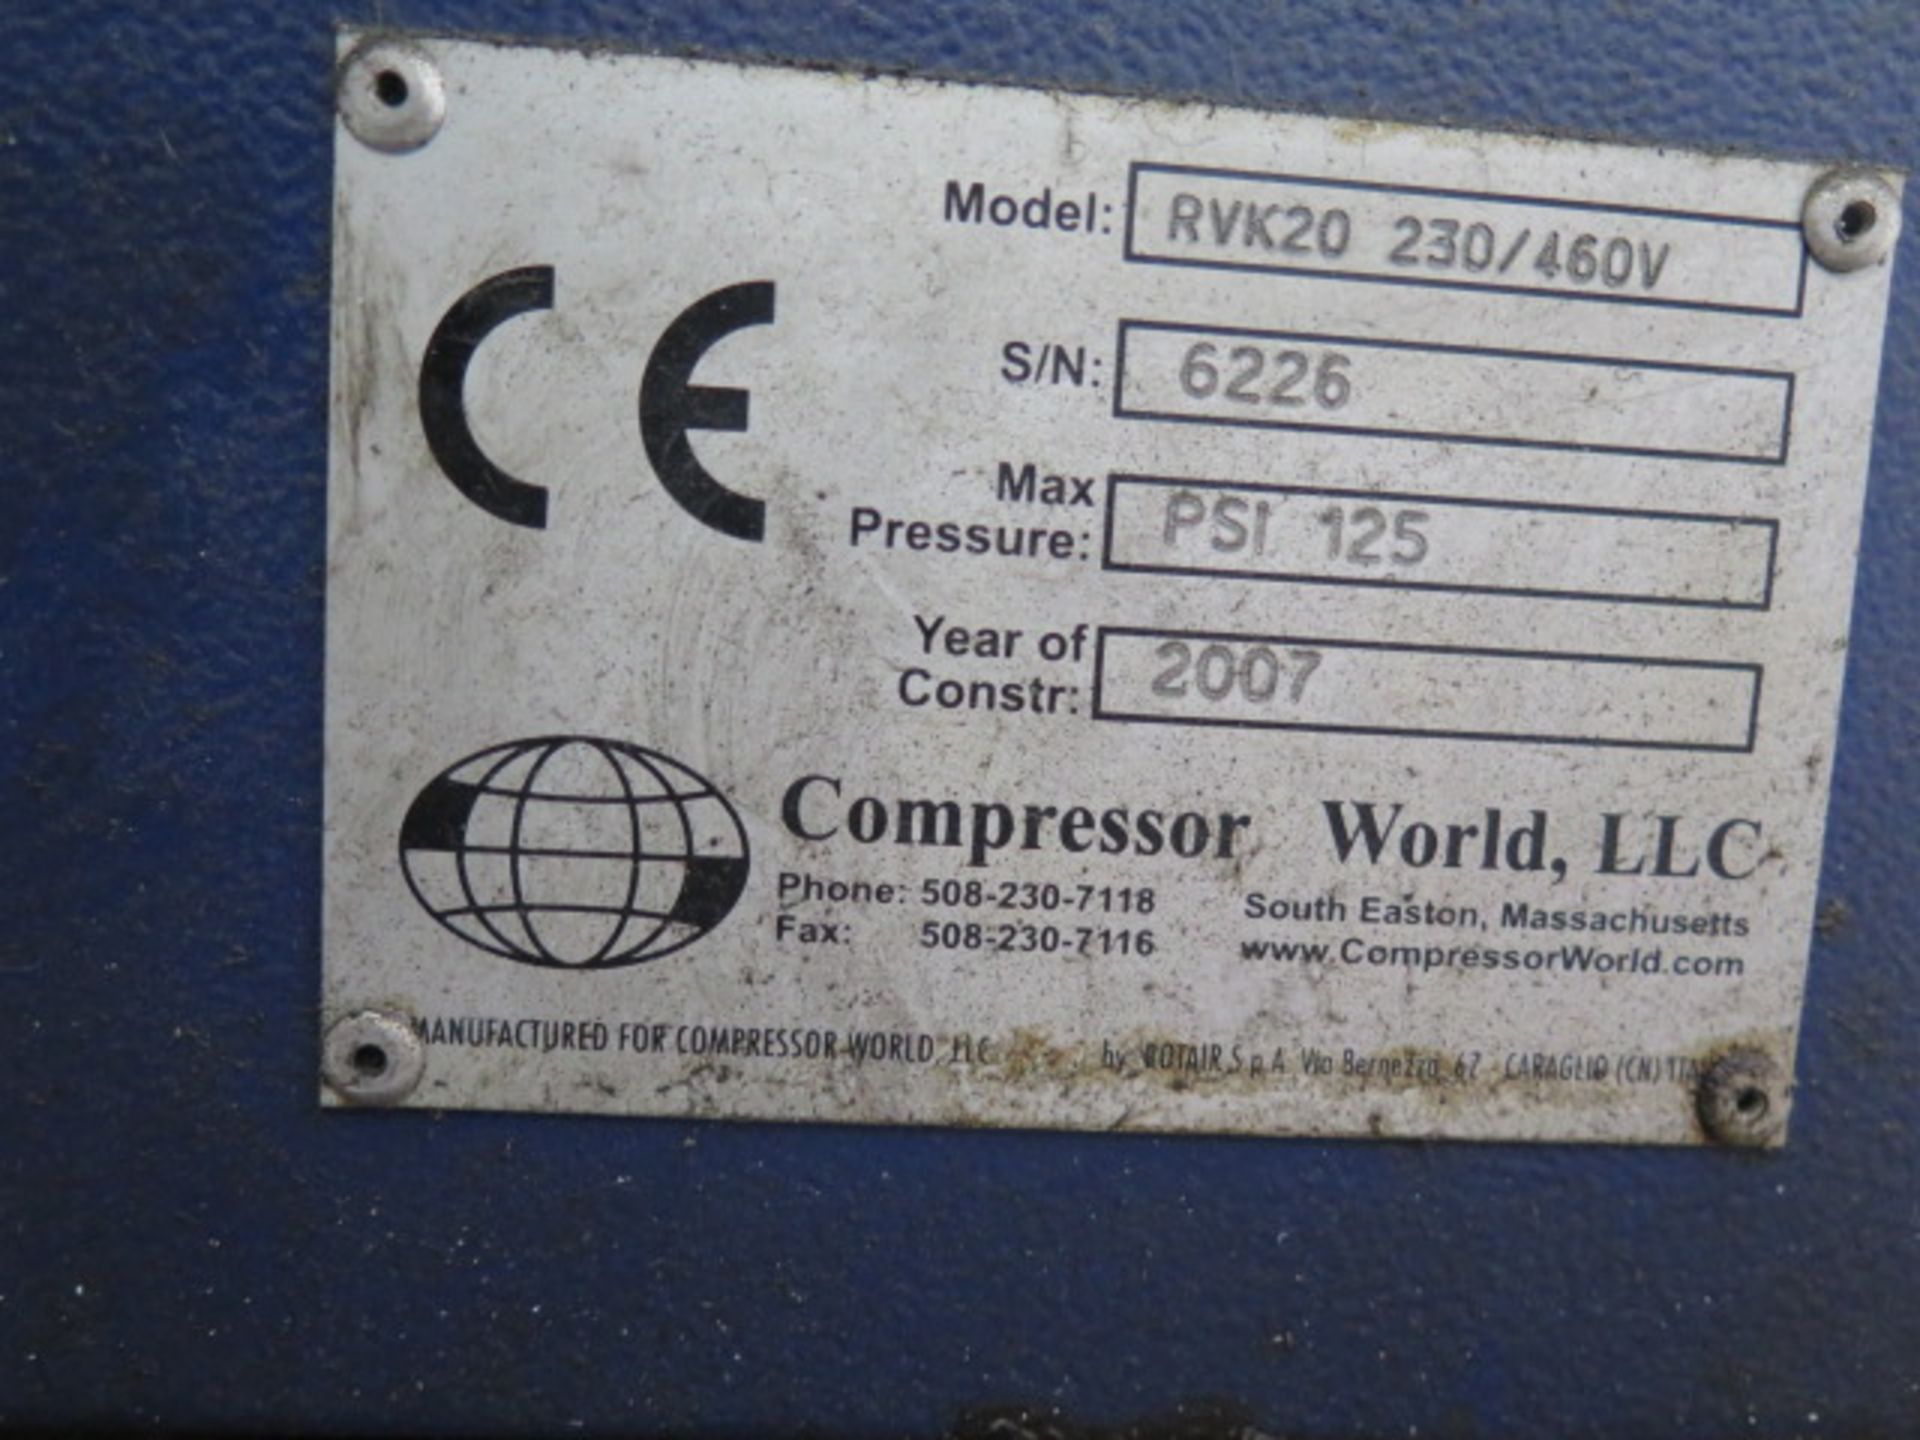 2007 Worldair RVK20 230/460V Rotary Vane Air Compressor s/n 6226 w/ Digital Controls, 125 PSIG - Image 5 of 5